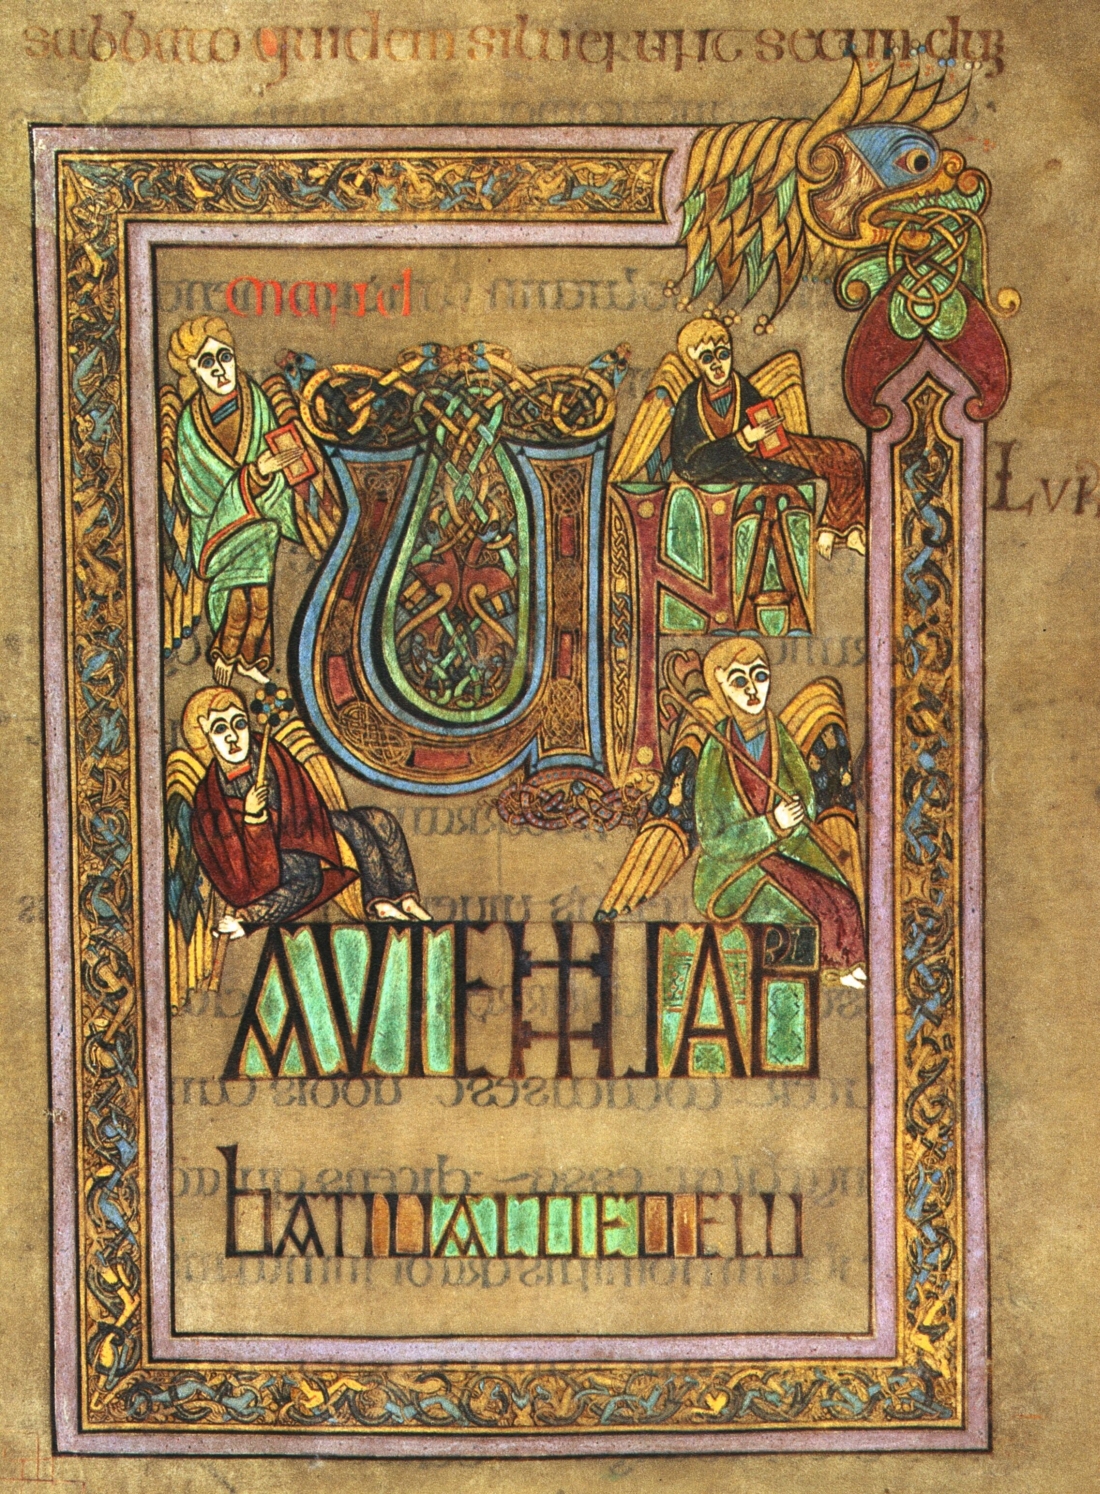 The Book of Kells illuminated manuscript page